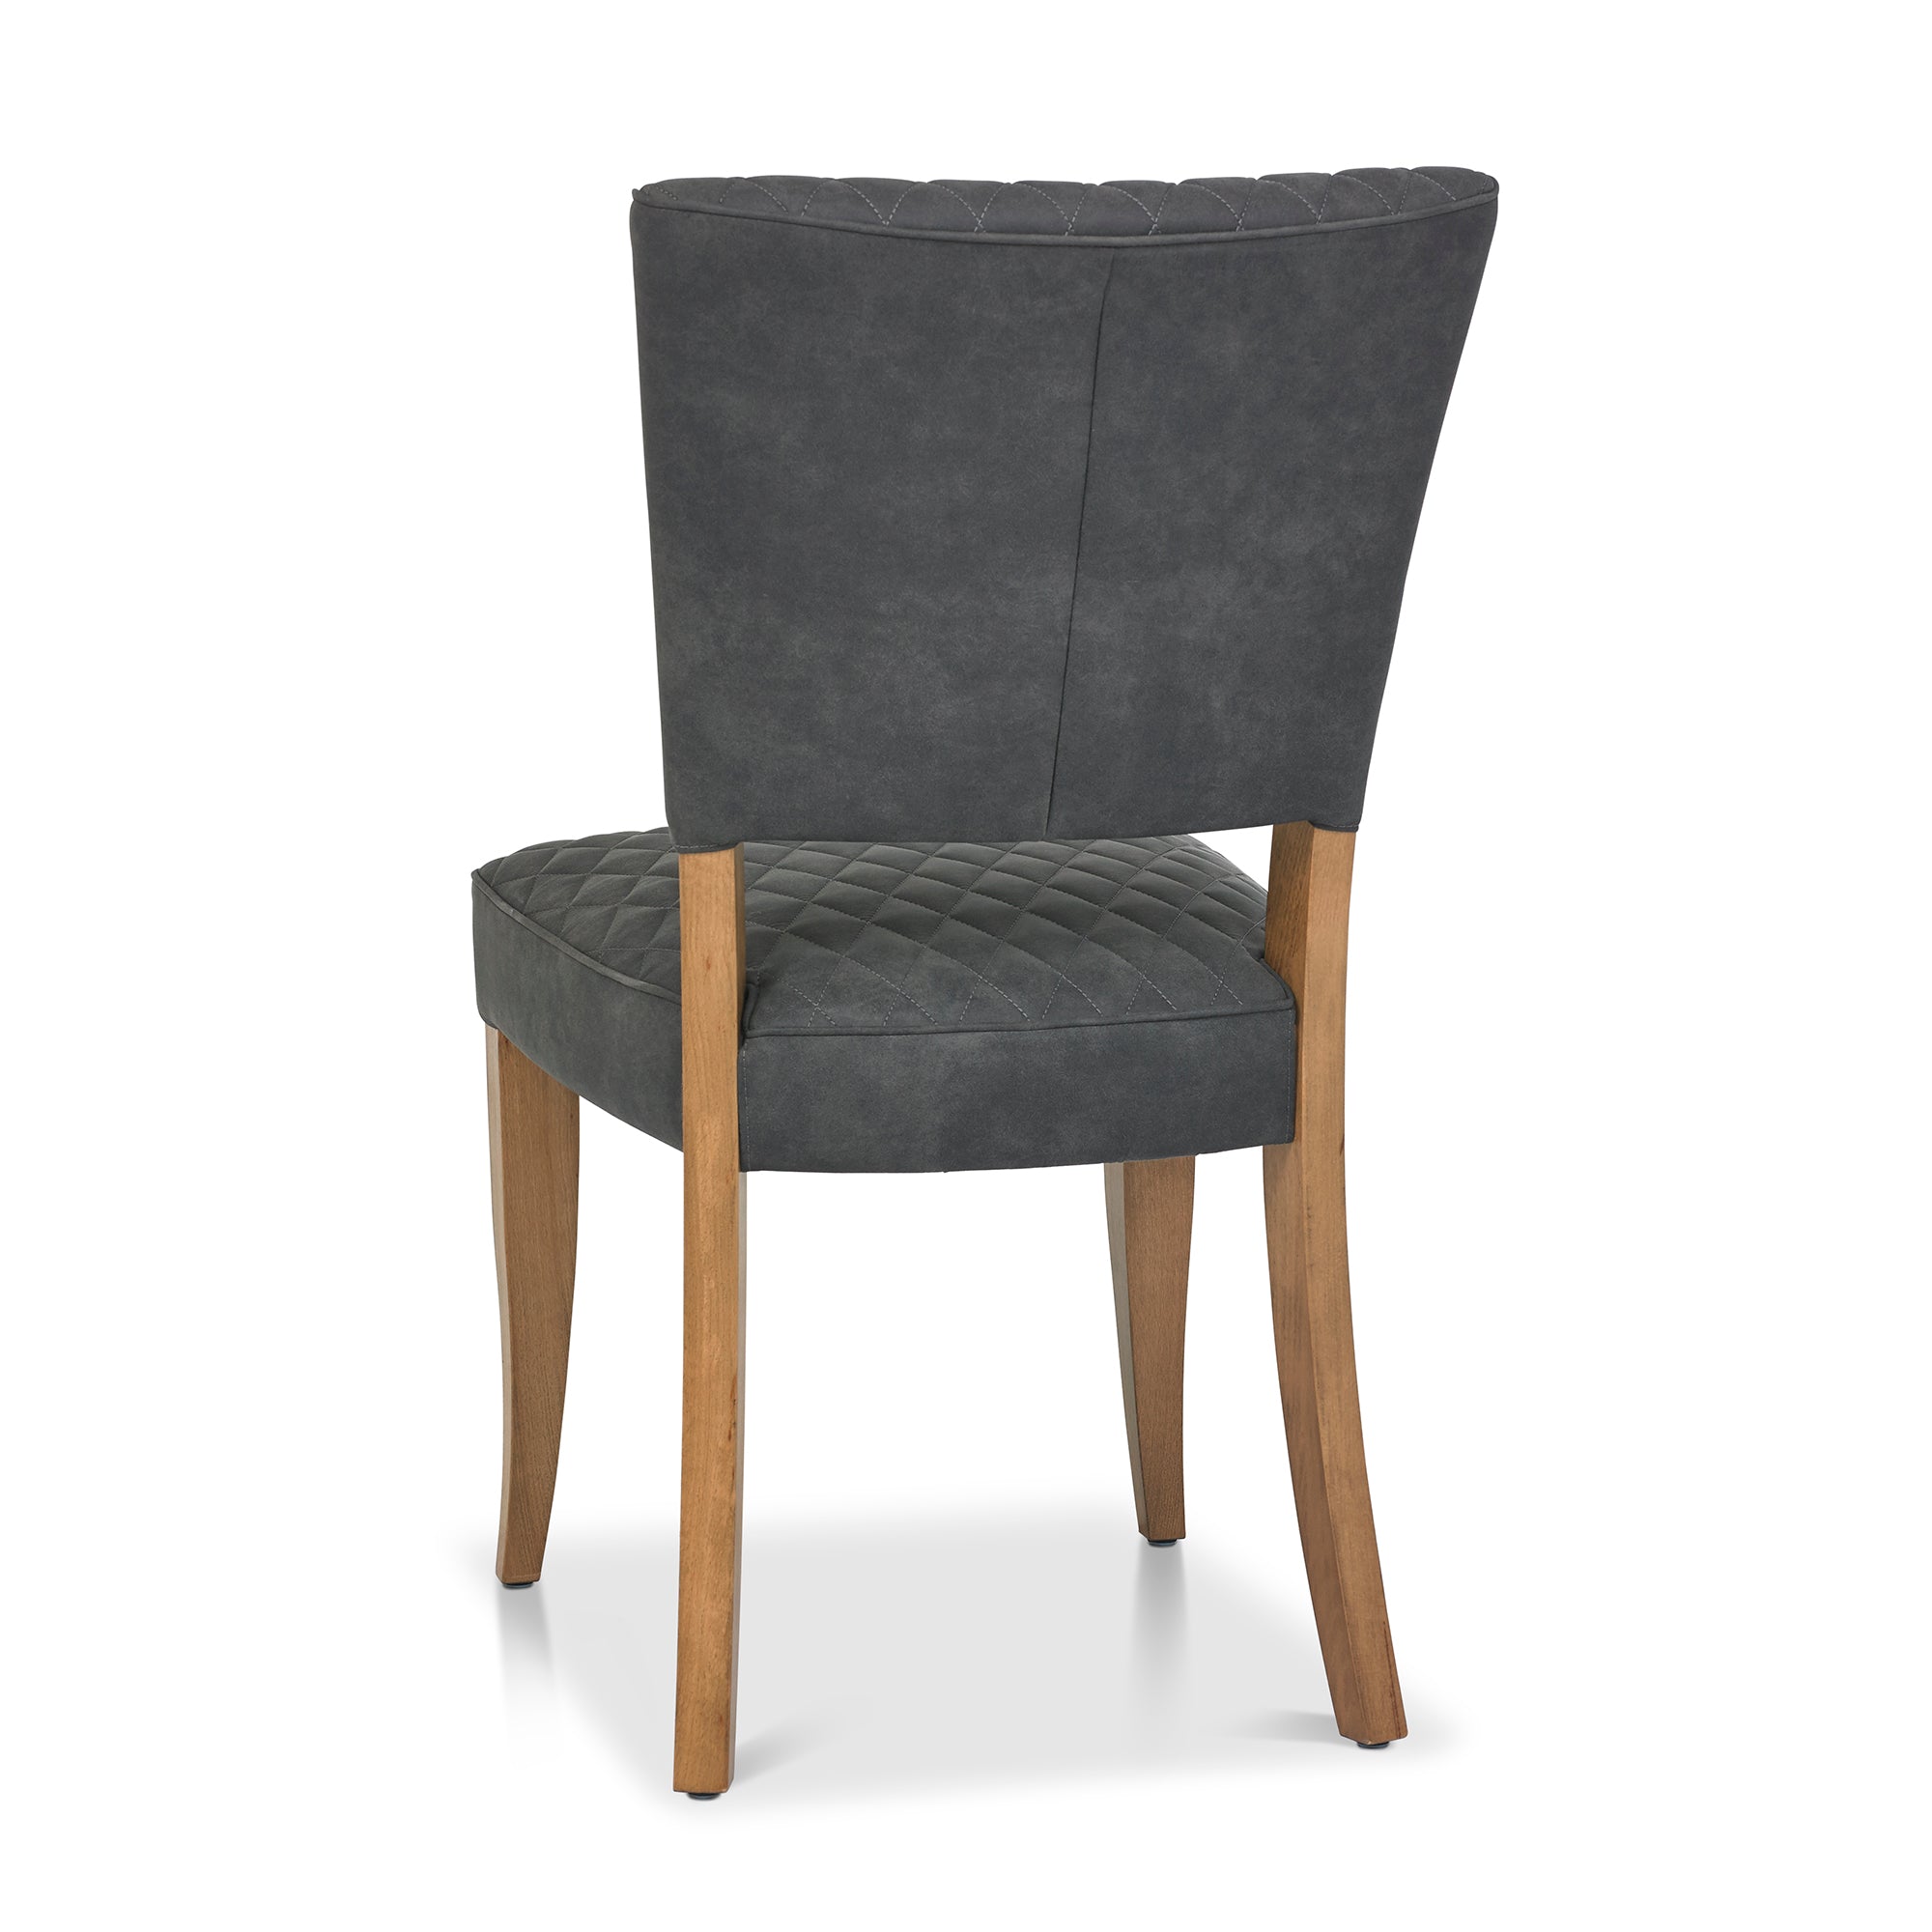 Landon Rustic Oak Dining Chairs (Pair) Dark Grey